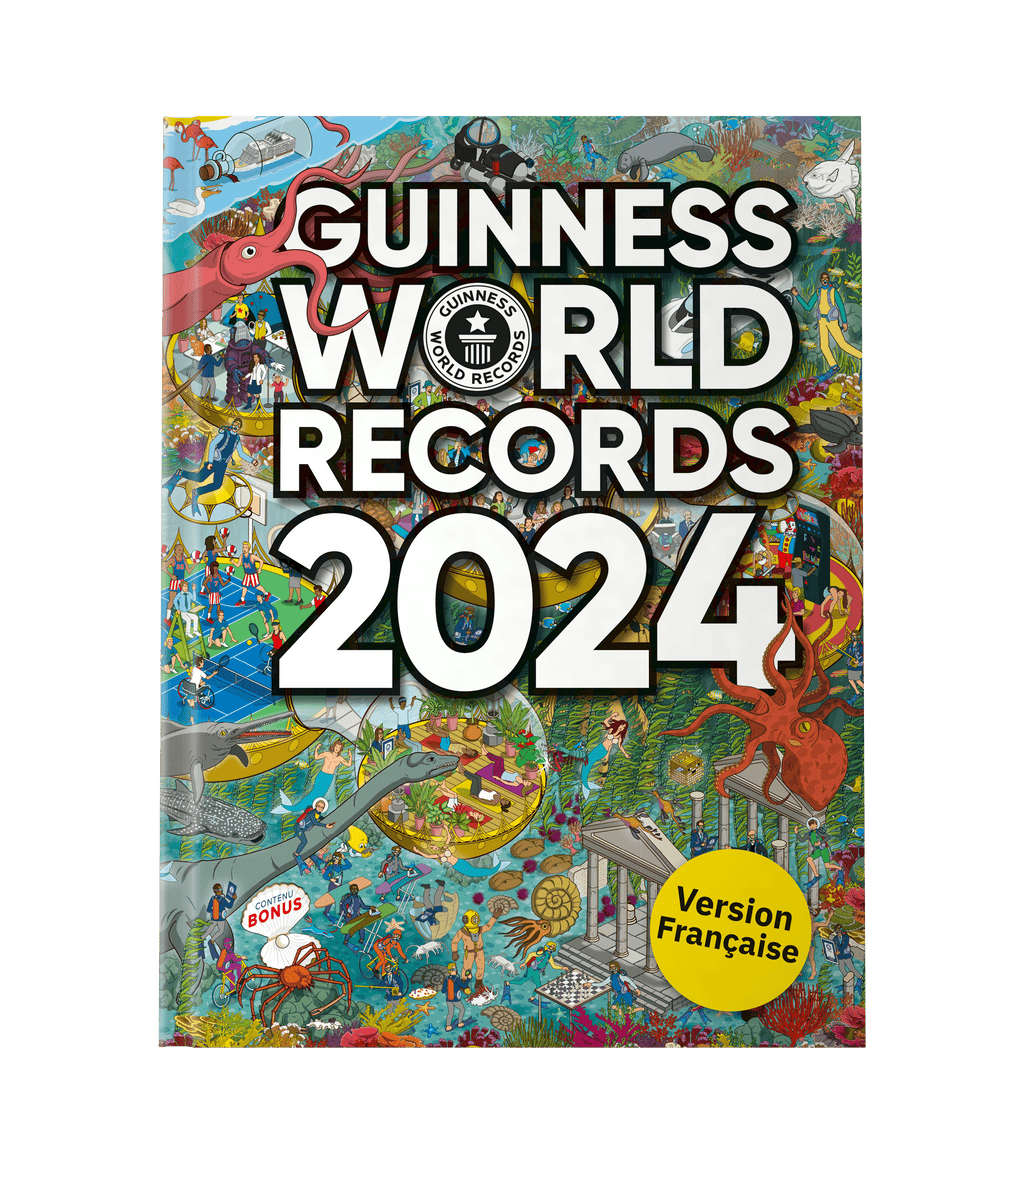 Guinness world records 2024